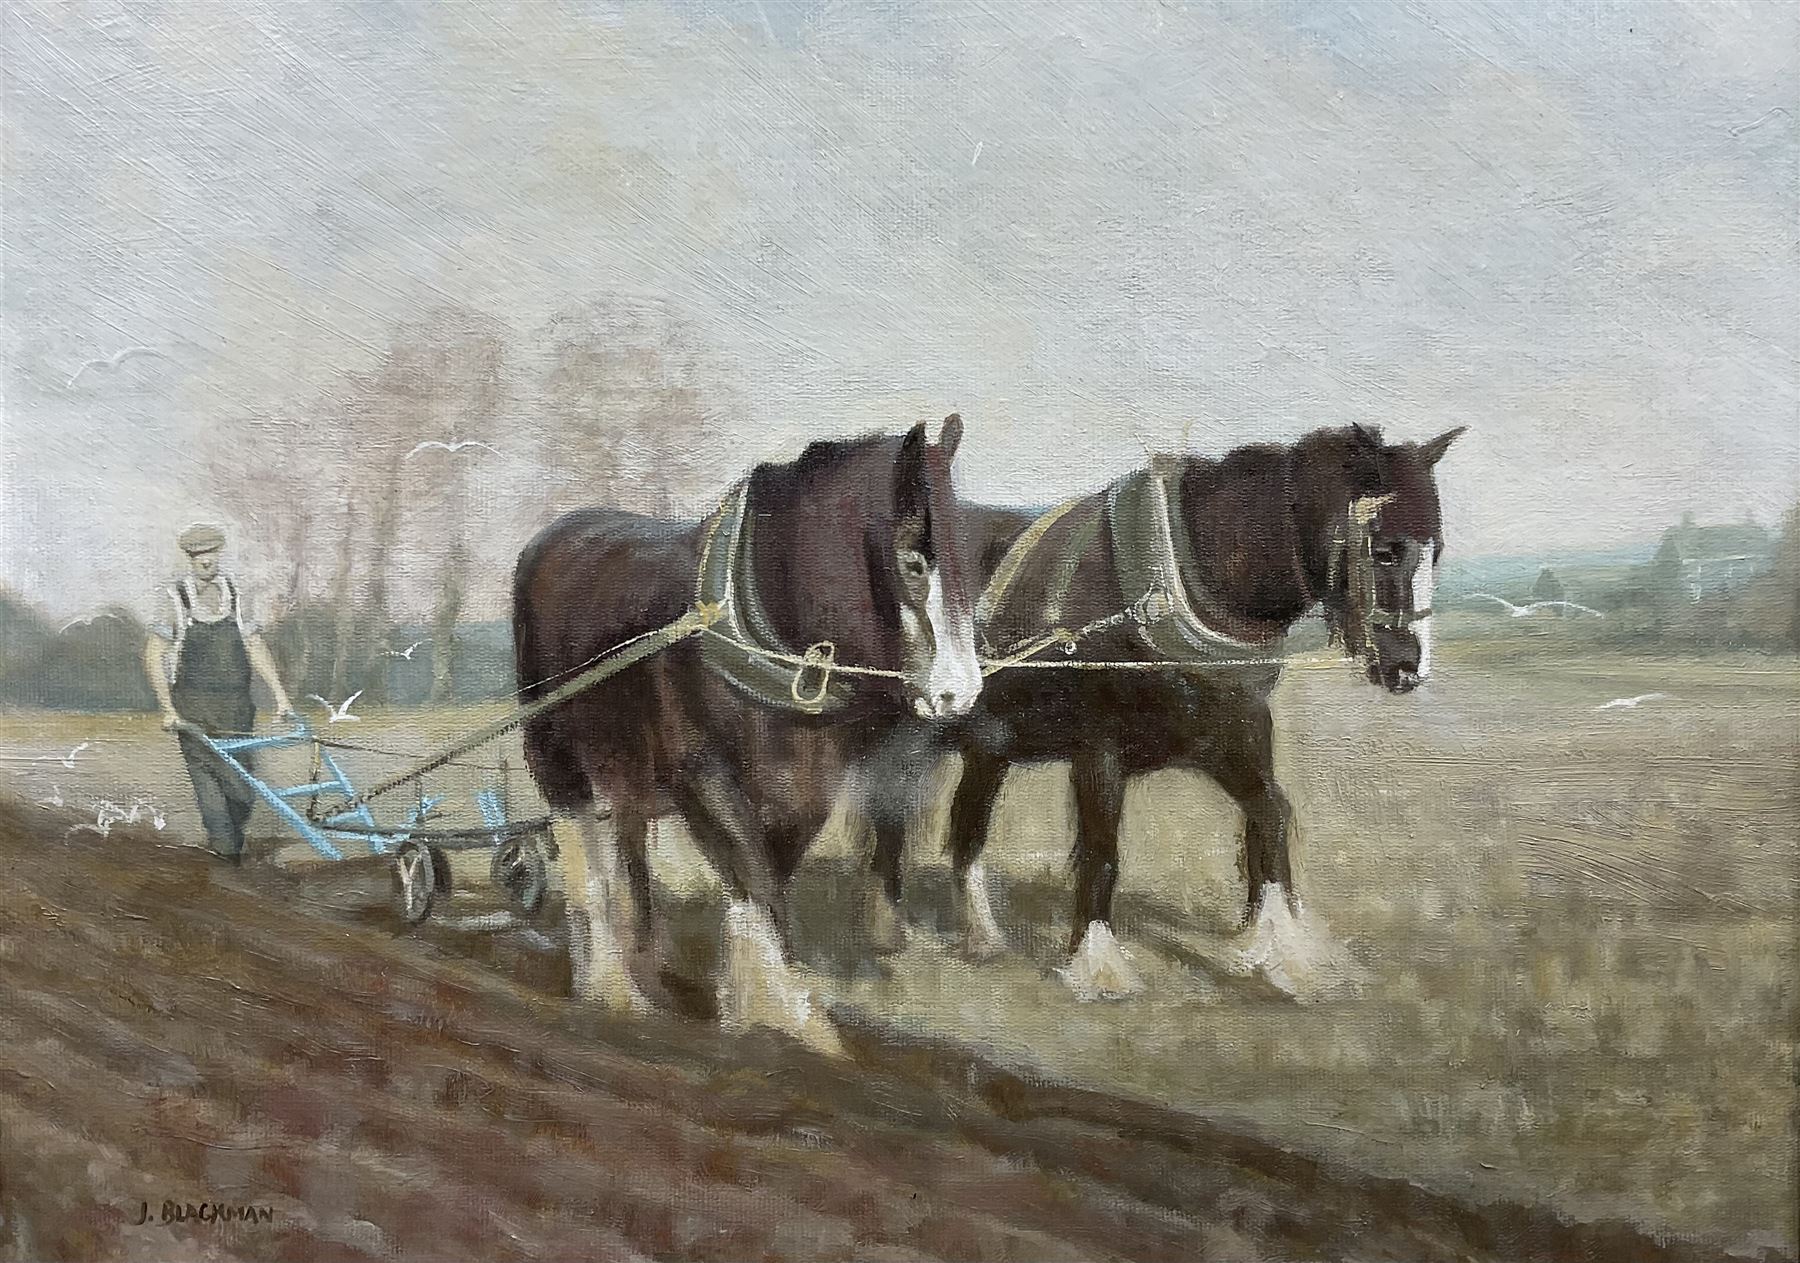 J Blackman (20th century): Heavy Horses Ploughing